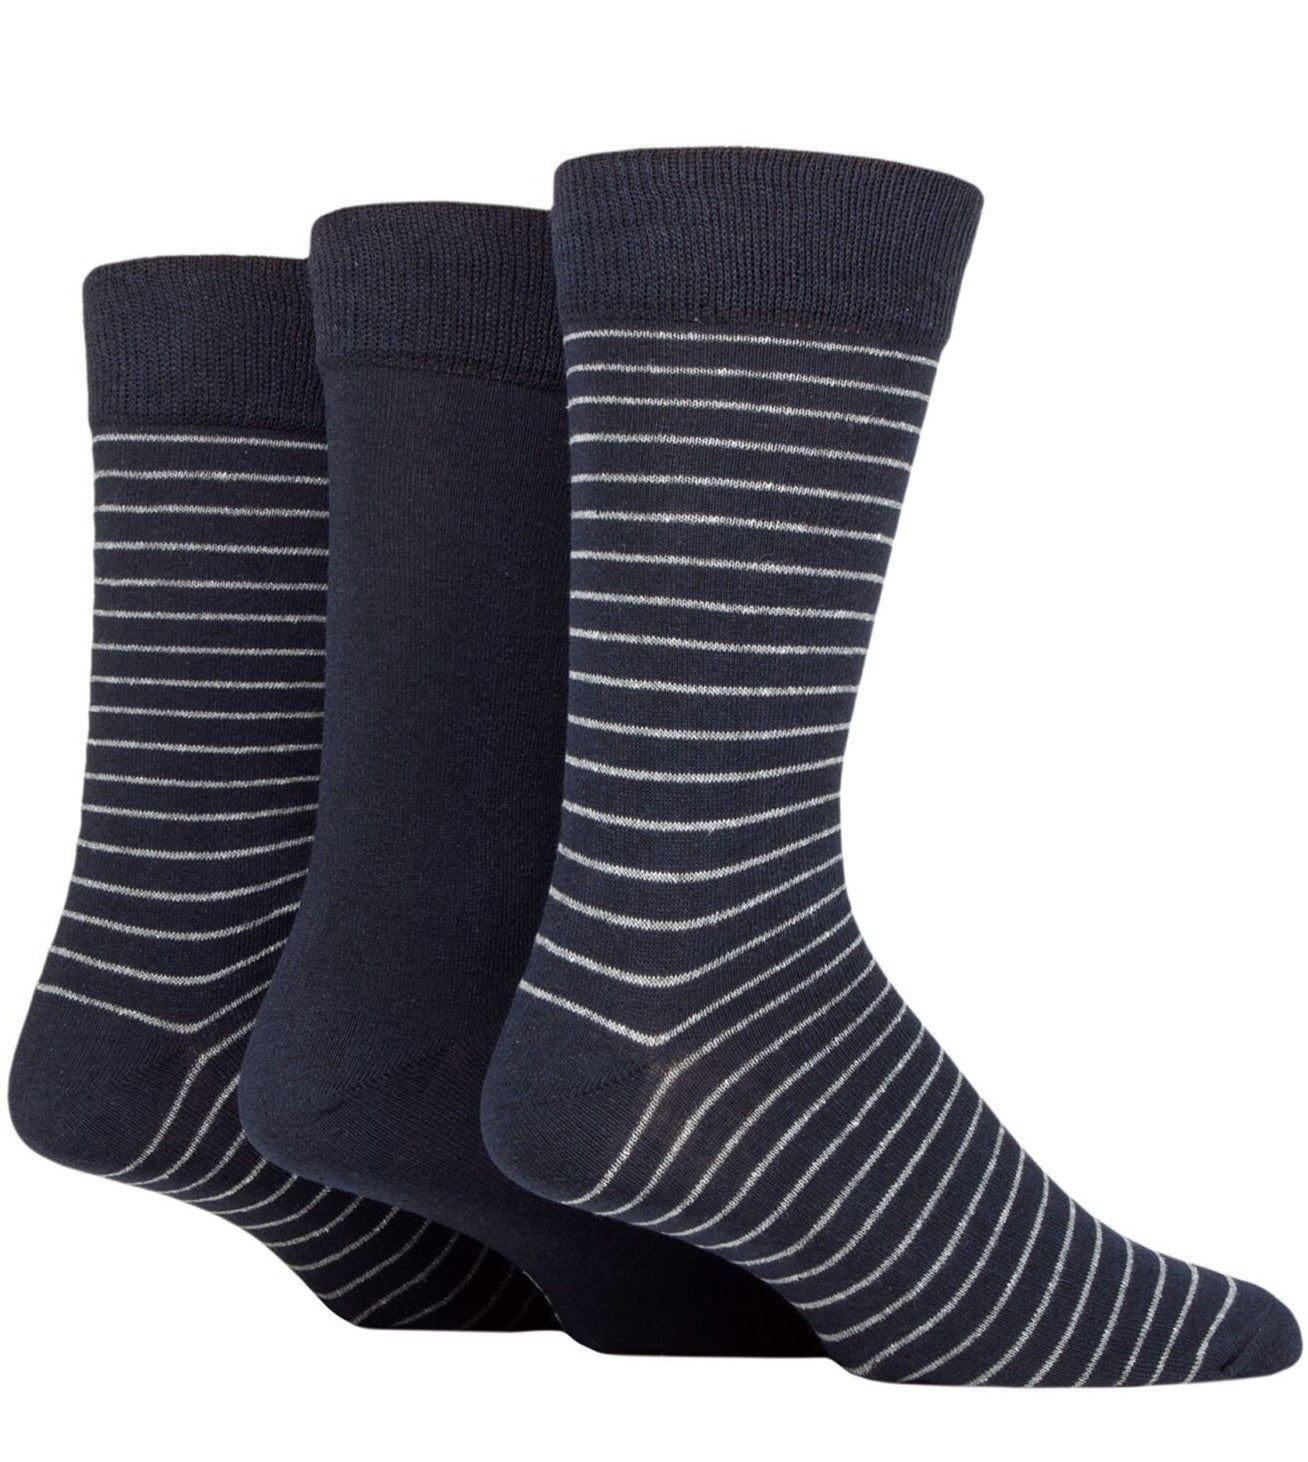 TORE 3Pk 100% Recycled Classic Fine Stripes Socks - Men's